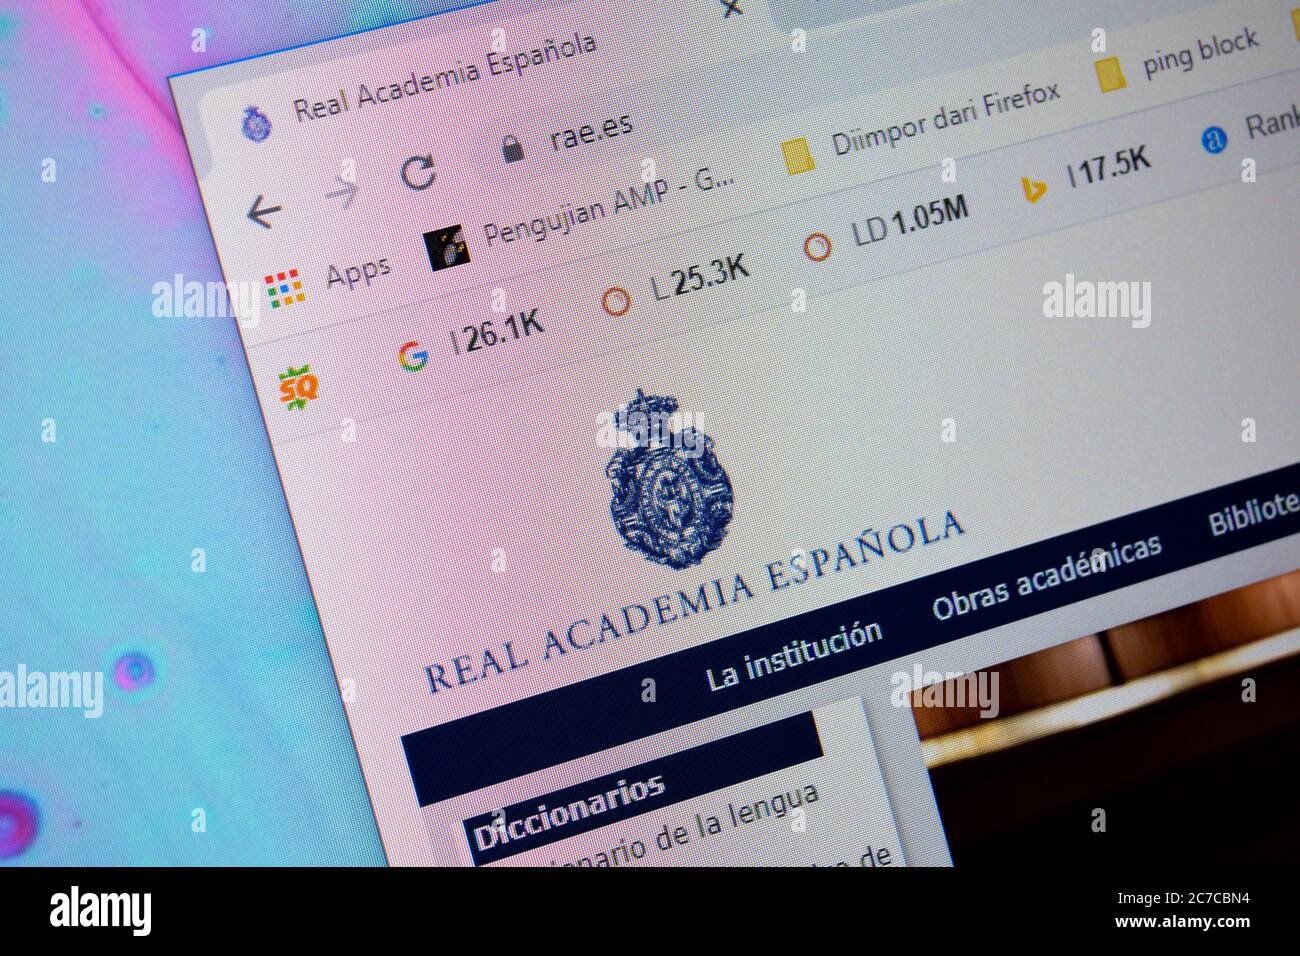 Real Academia Espanola website home page on computer screen. Bekasi, July 16 2020 Stock Photo